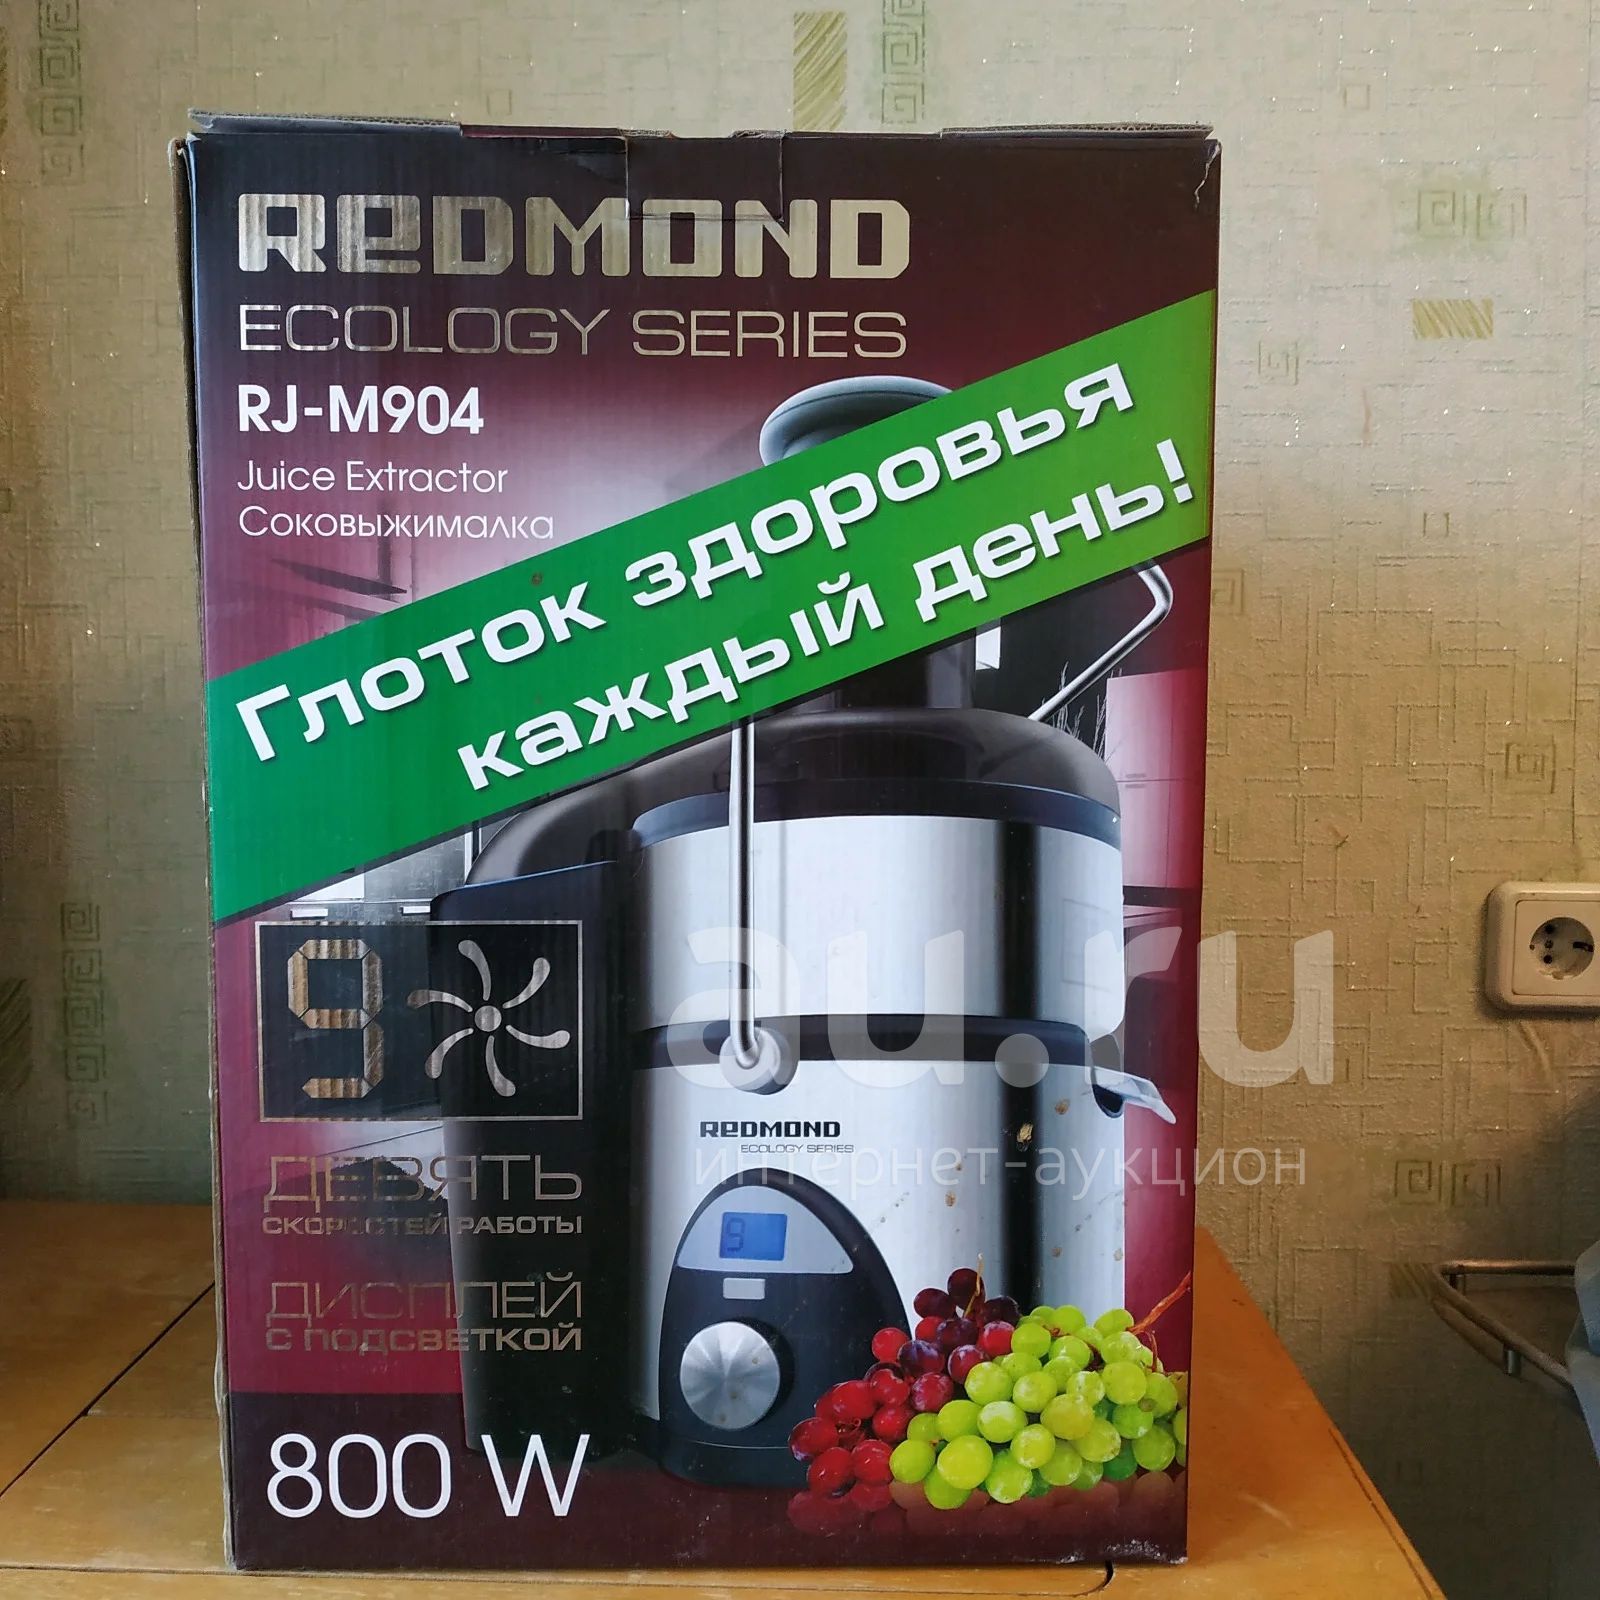 Соковыжималка Redmond RJ-m904. Redmond RJ-m904 инструкция. Redmond Juice Extractor RJ-m908. Redmond ecology series